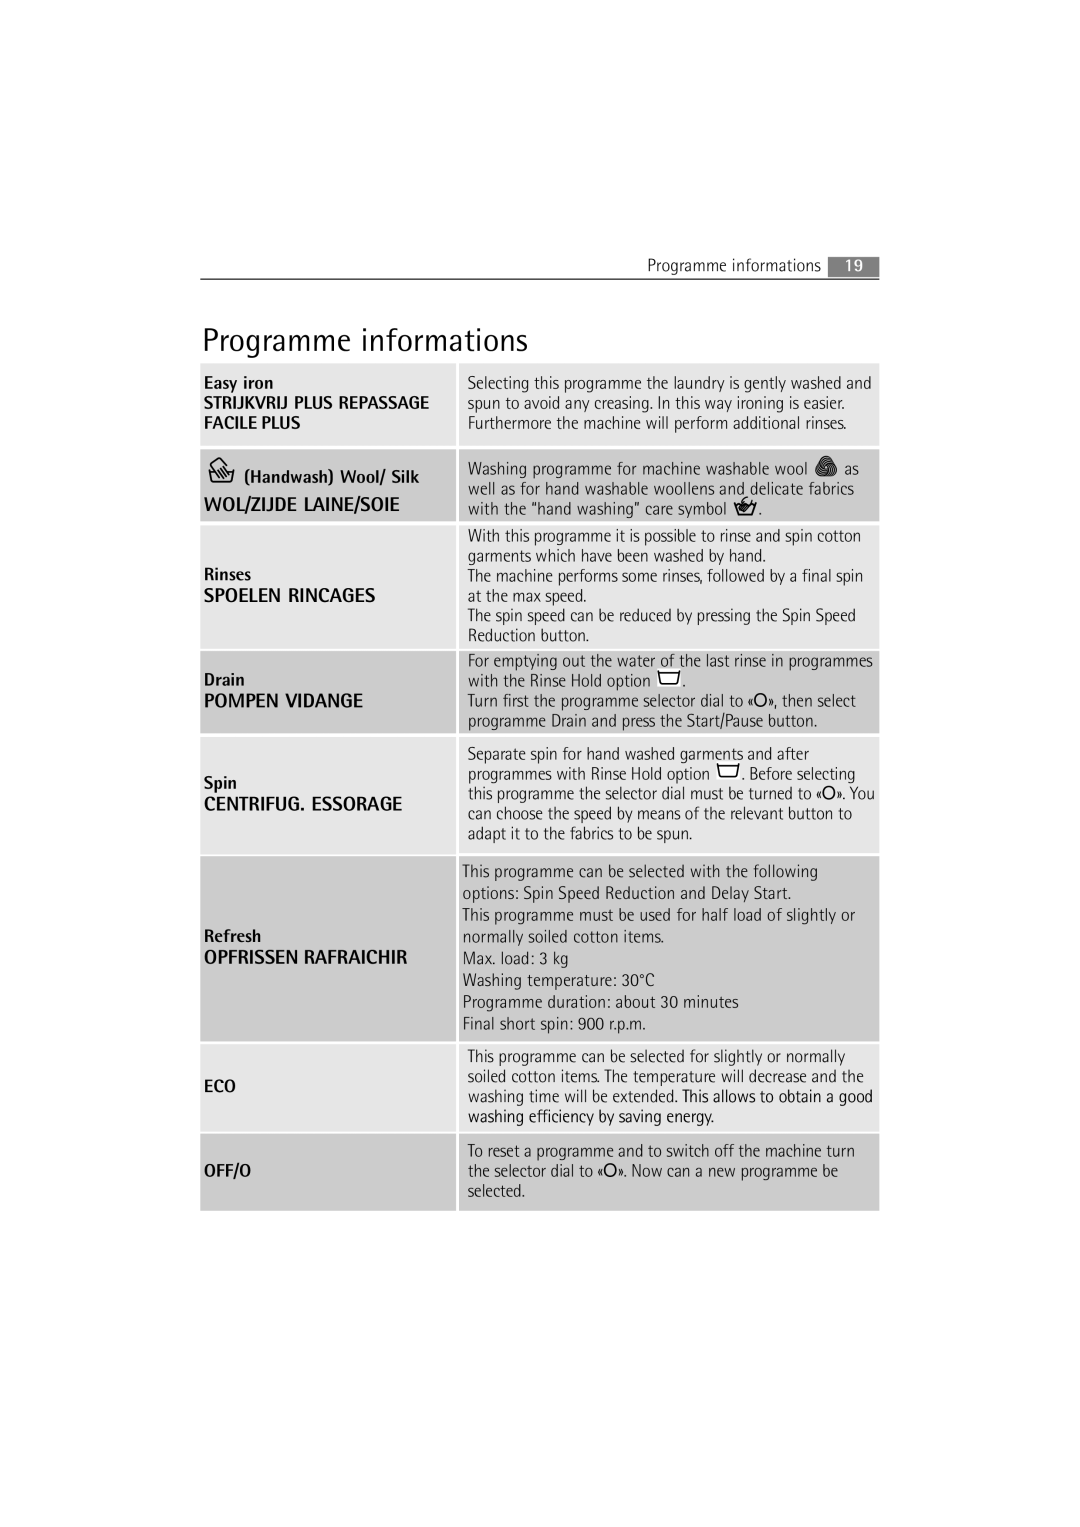 AEG 54840 manual Programme informations, Opfrissen Rafraichir 